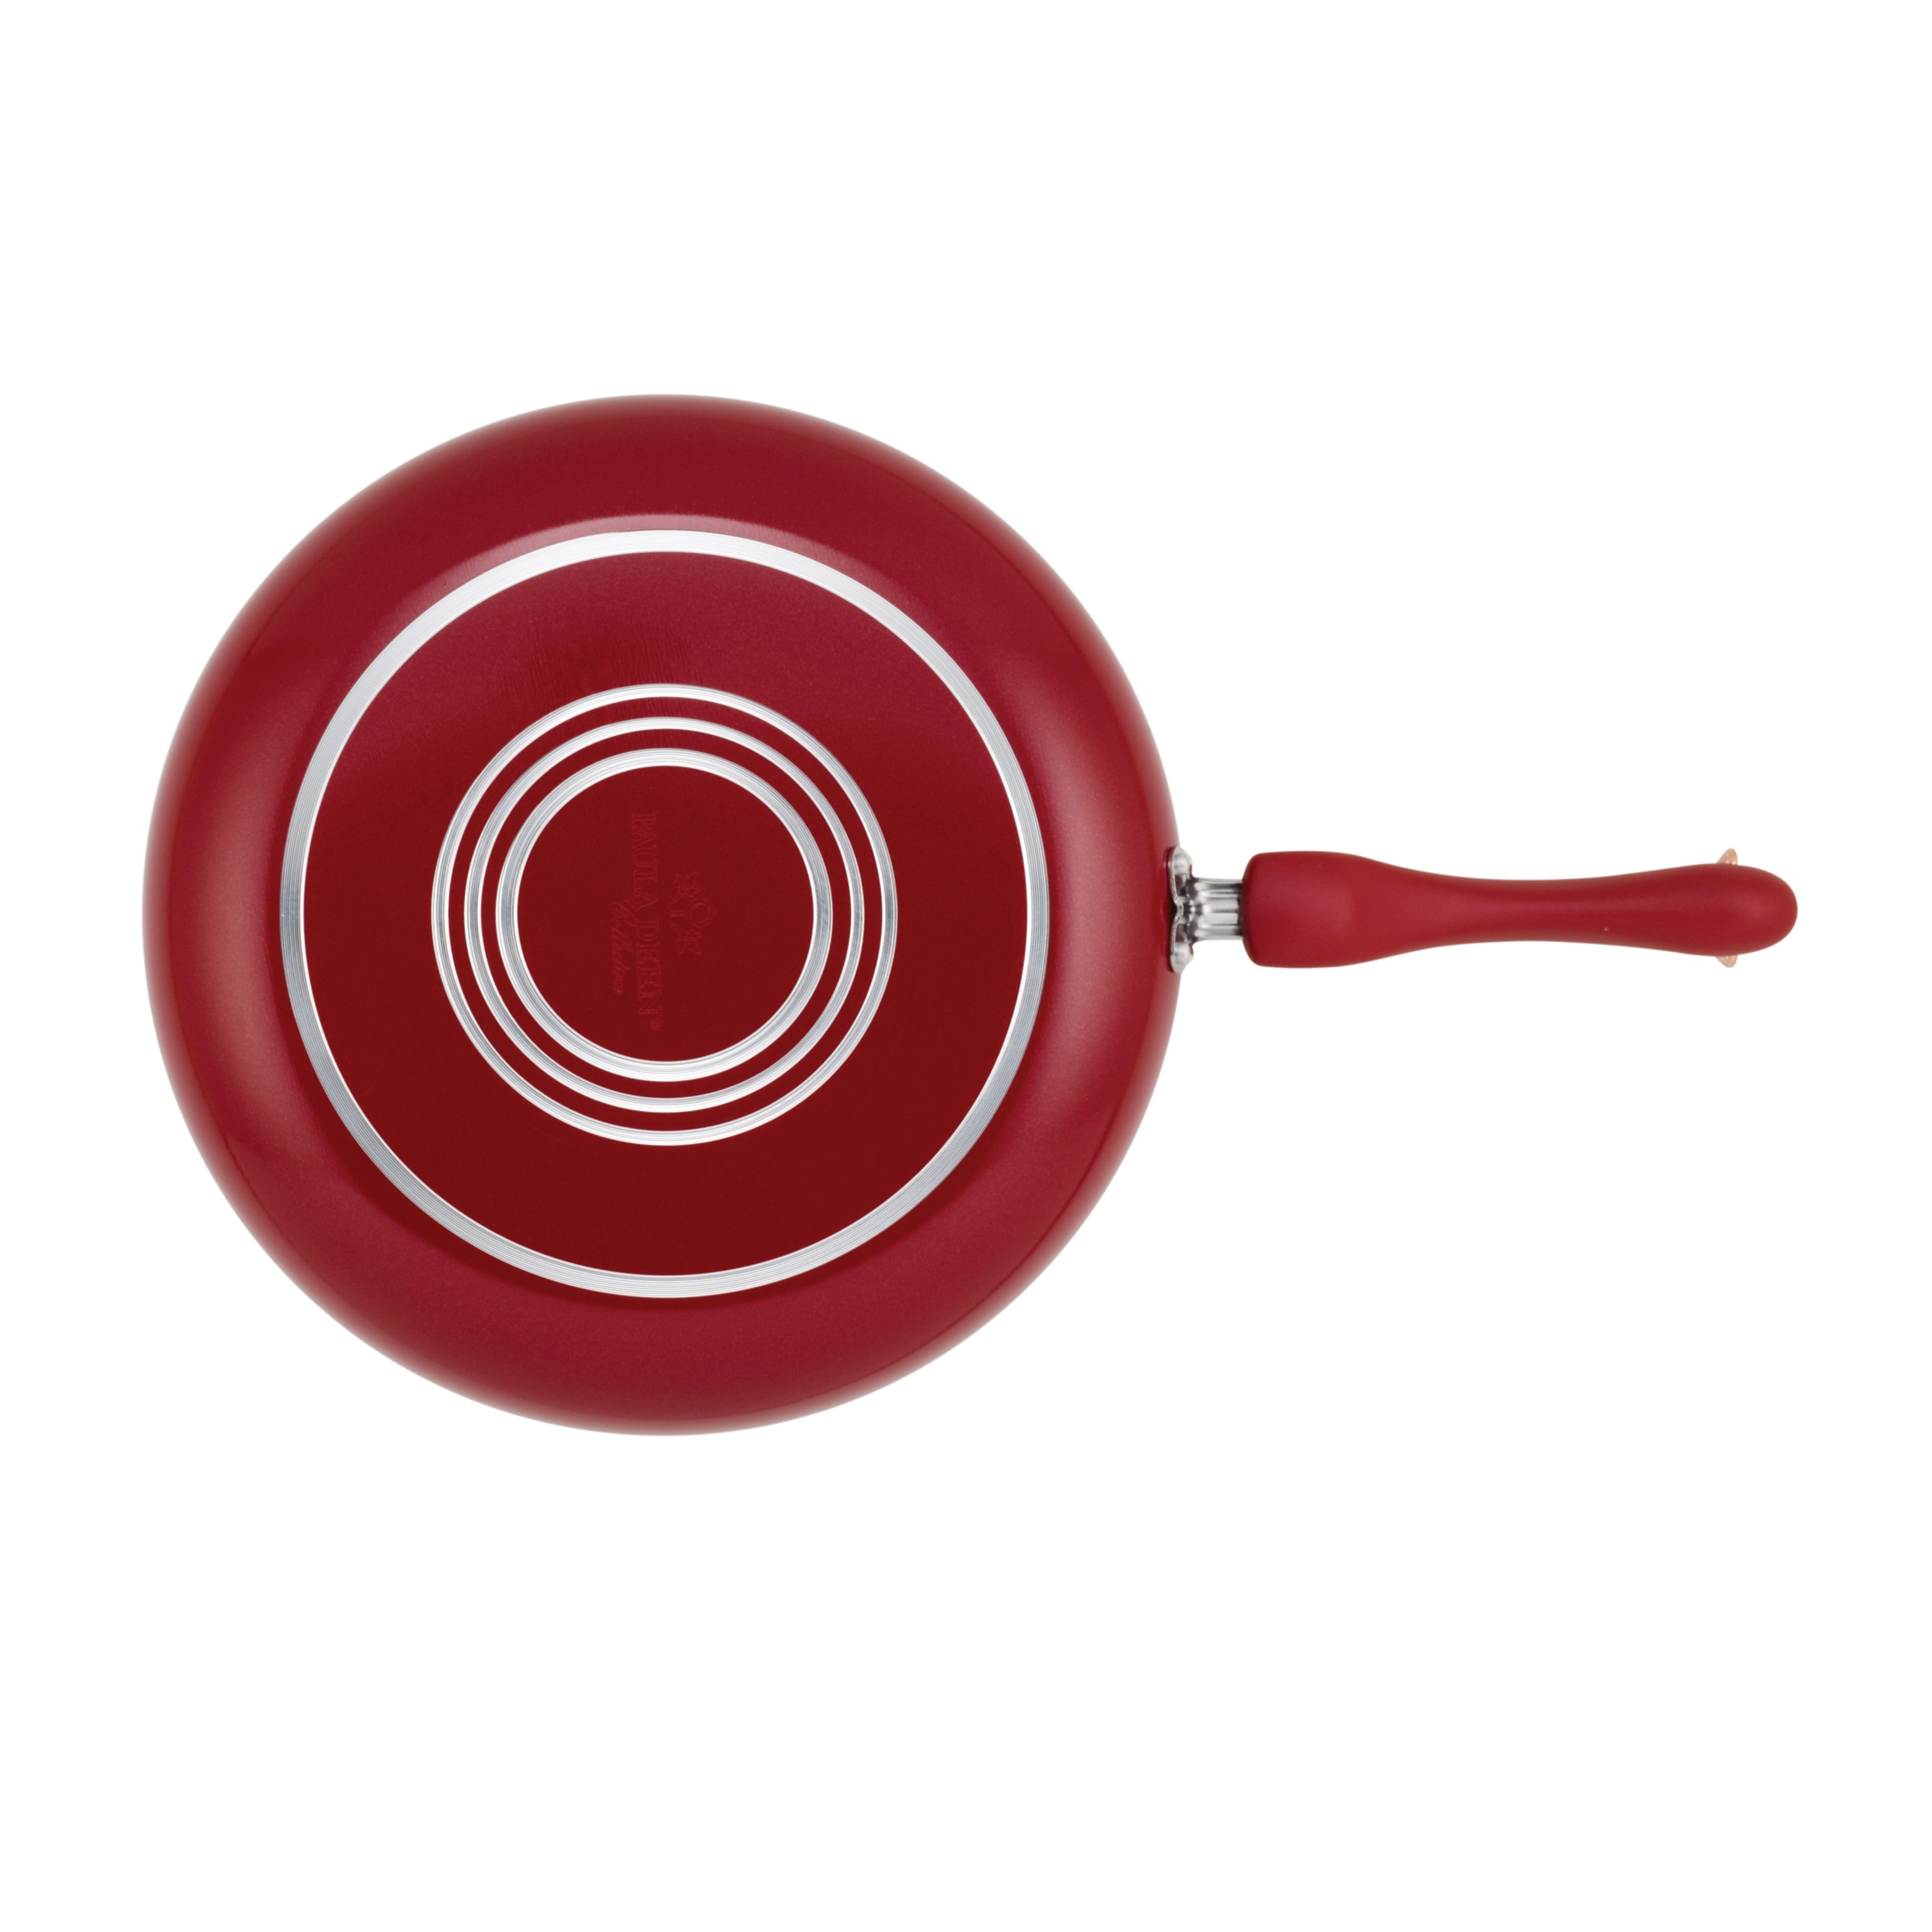 https://ak1.ostkcdn.com/images/products/8366314/Paula-Deen-Signature-Dishwasher-Safe-Nonstick-11-piece-Red-Cookware-Set-f2239736-8ca8-400c-965d-223ef875304c.jpg